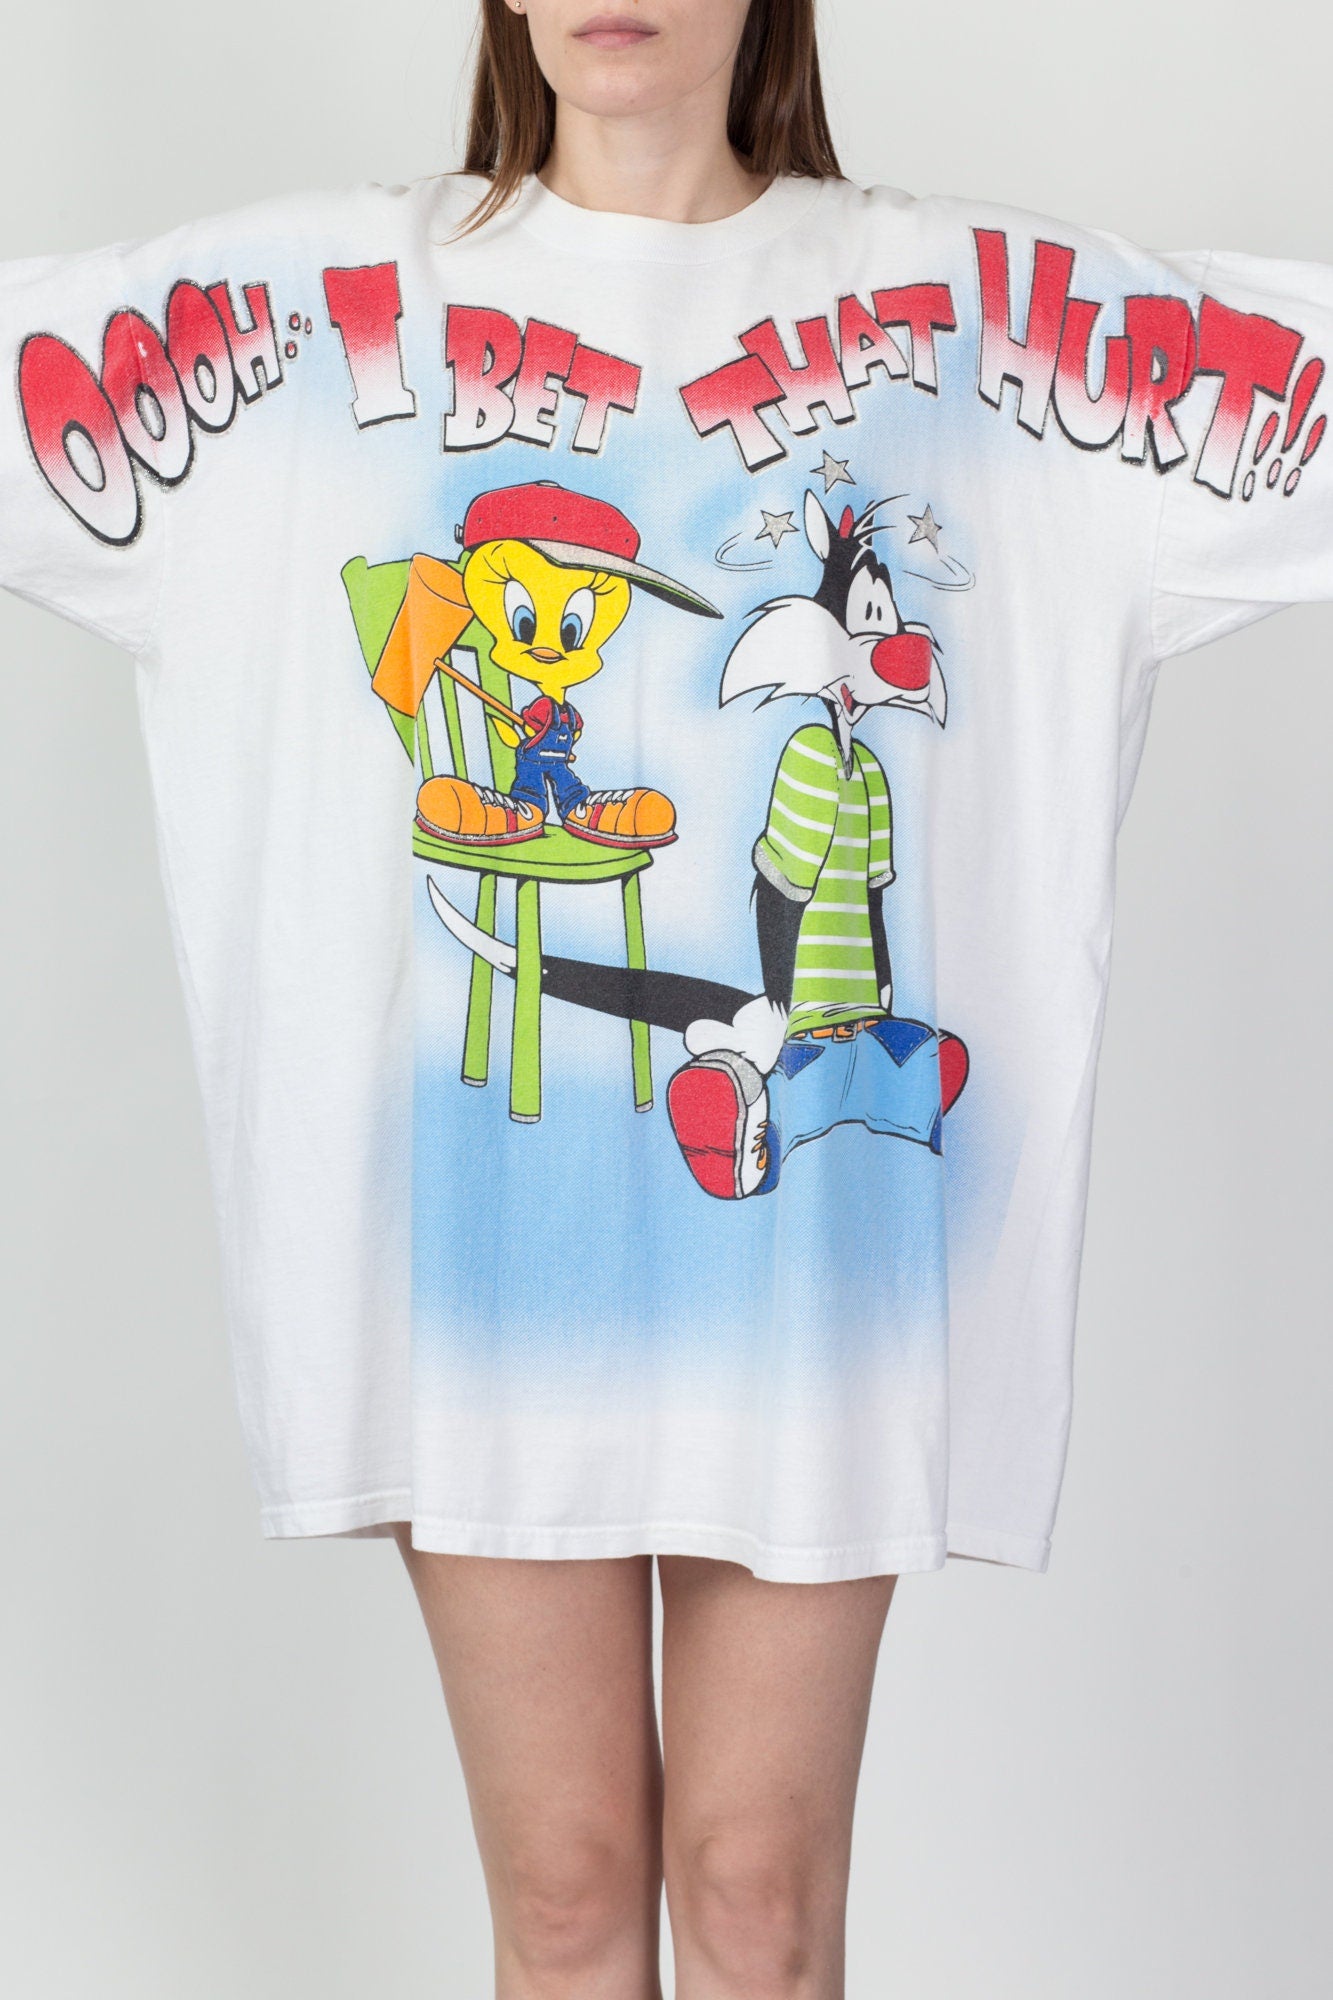 90s Tweety Bird "I Bet That Hurt!" T Shirt Dress - One Size 